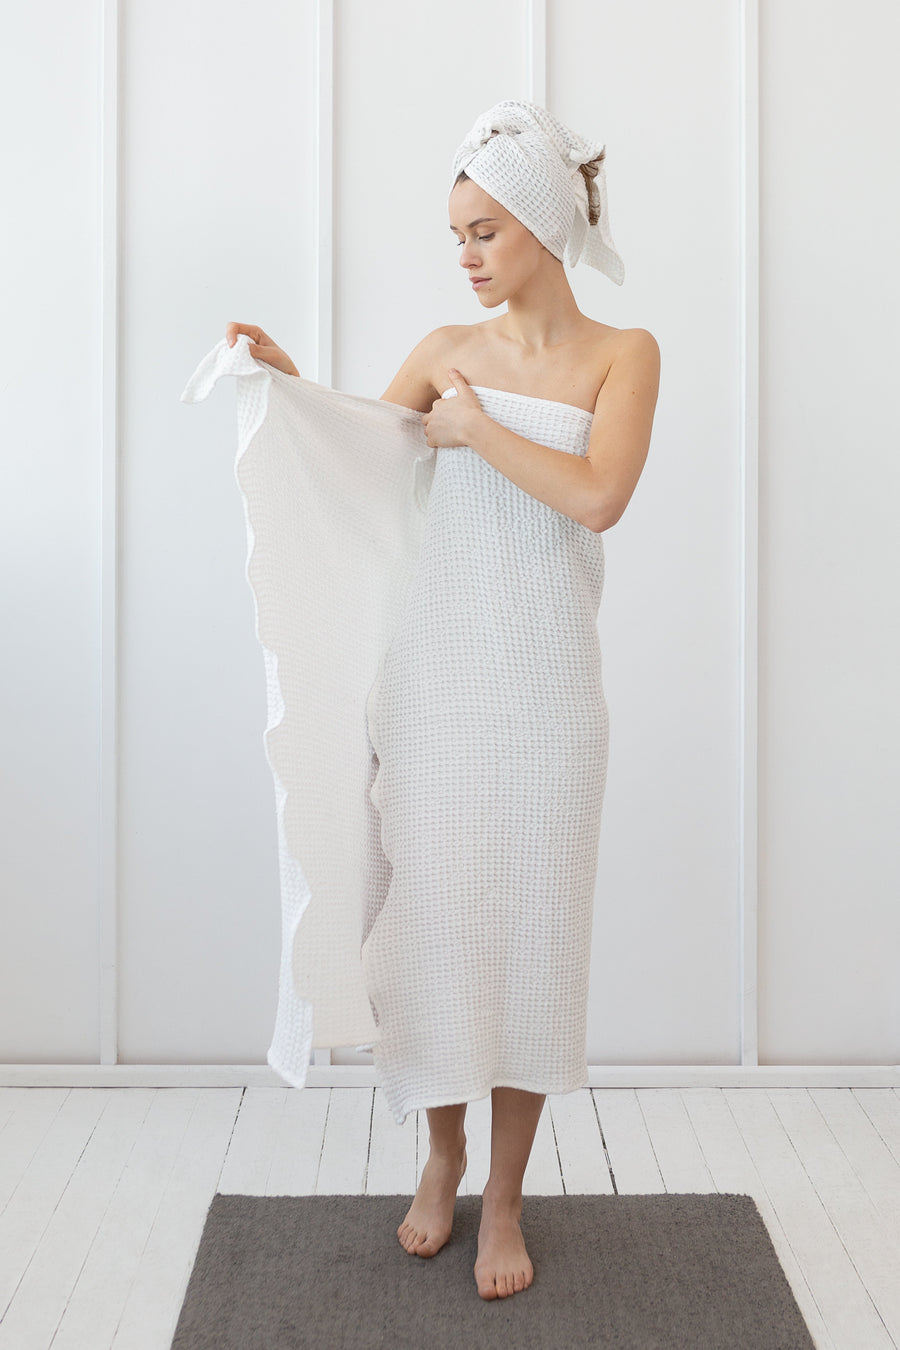 Amber waffle linen towel - Linen Couture Boutique